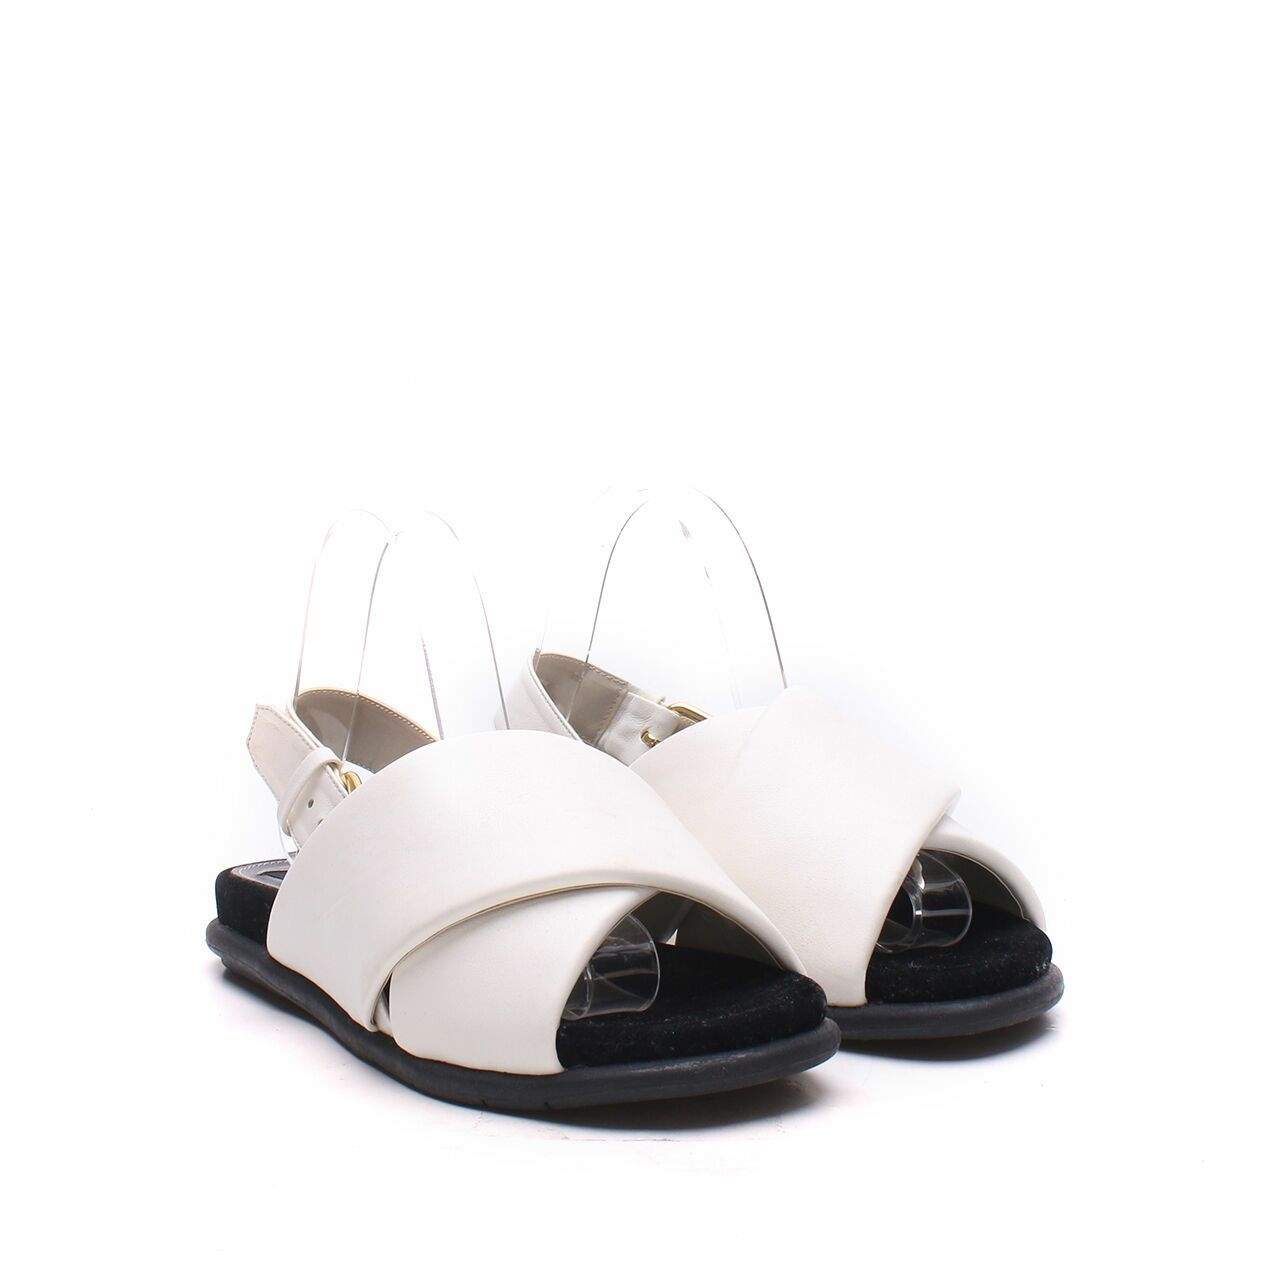 Chapelet Black & White Sandals